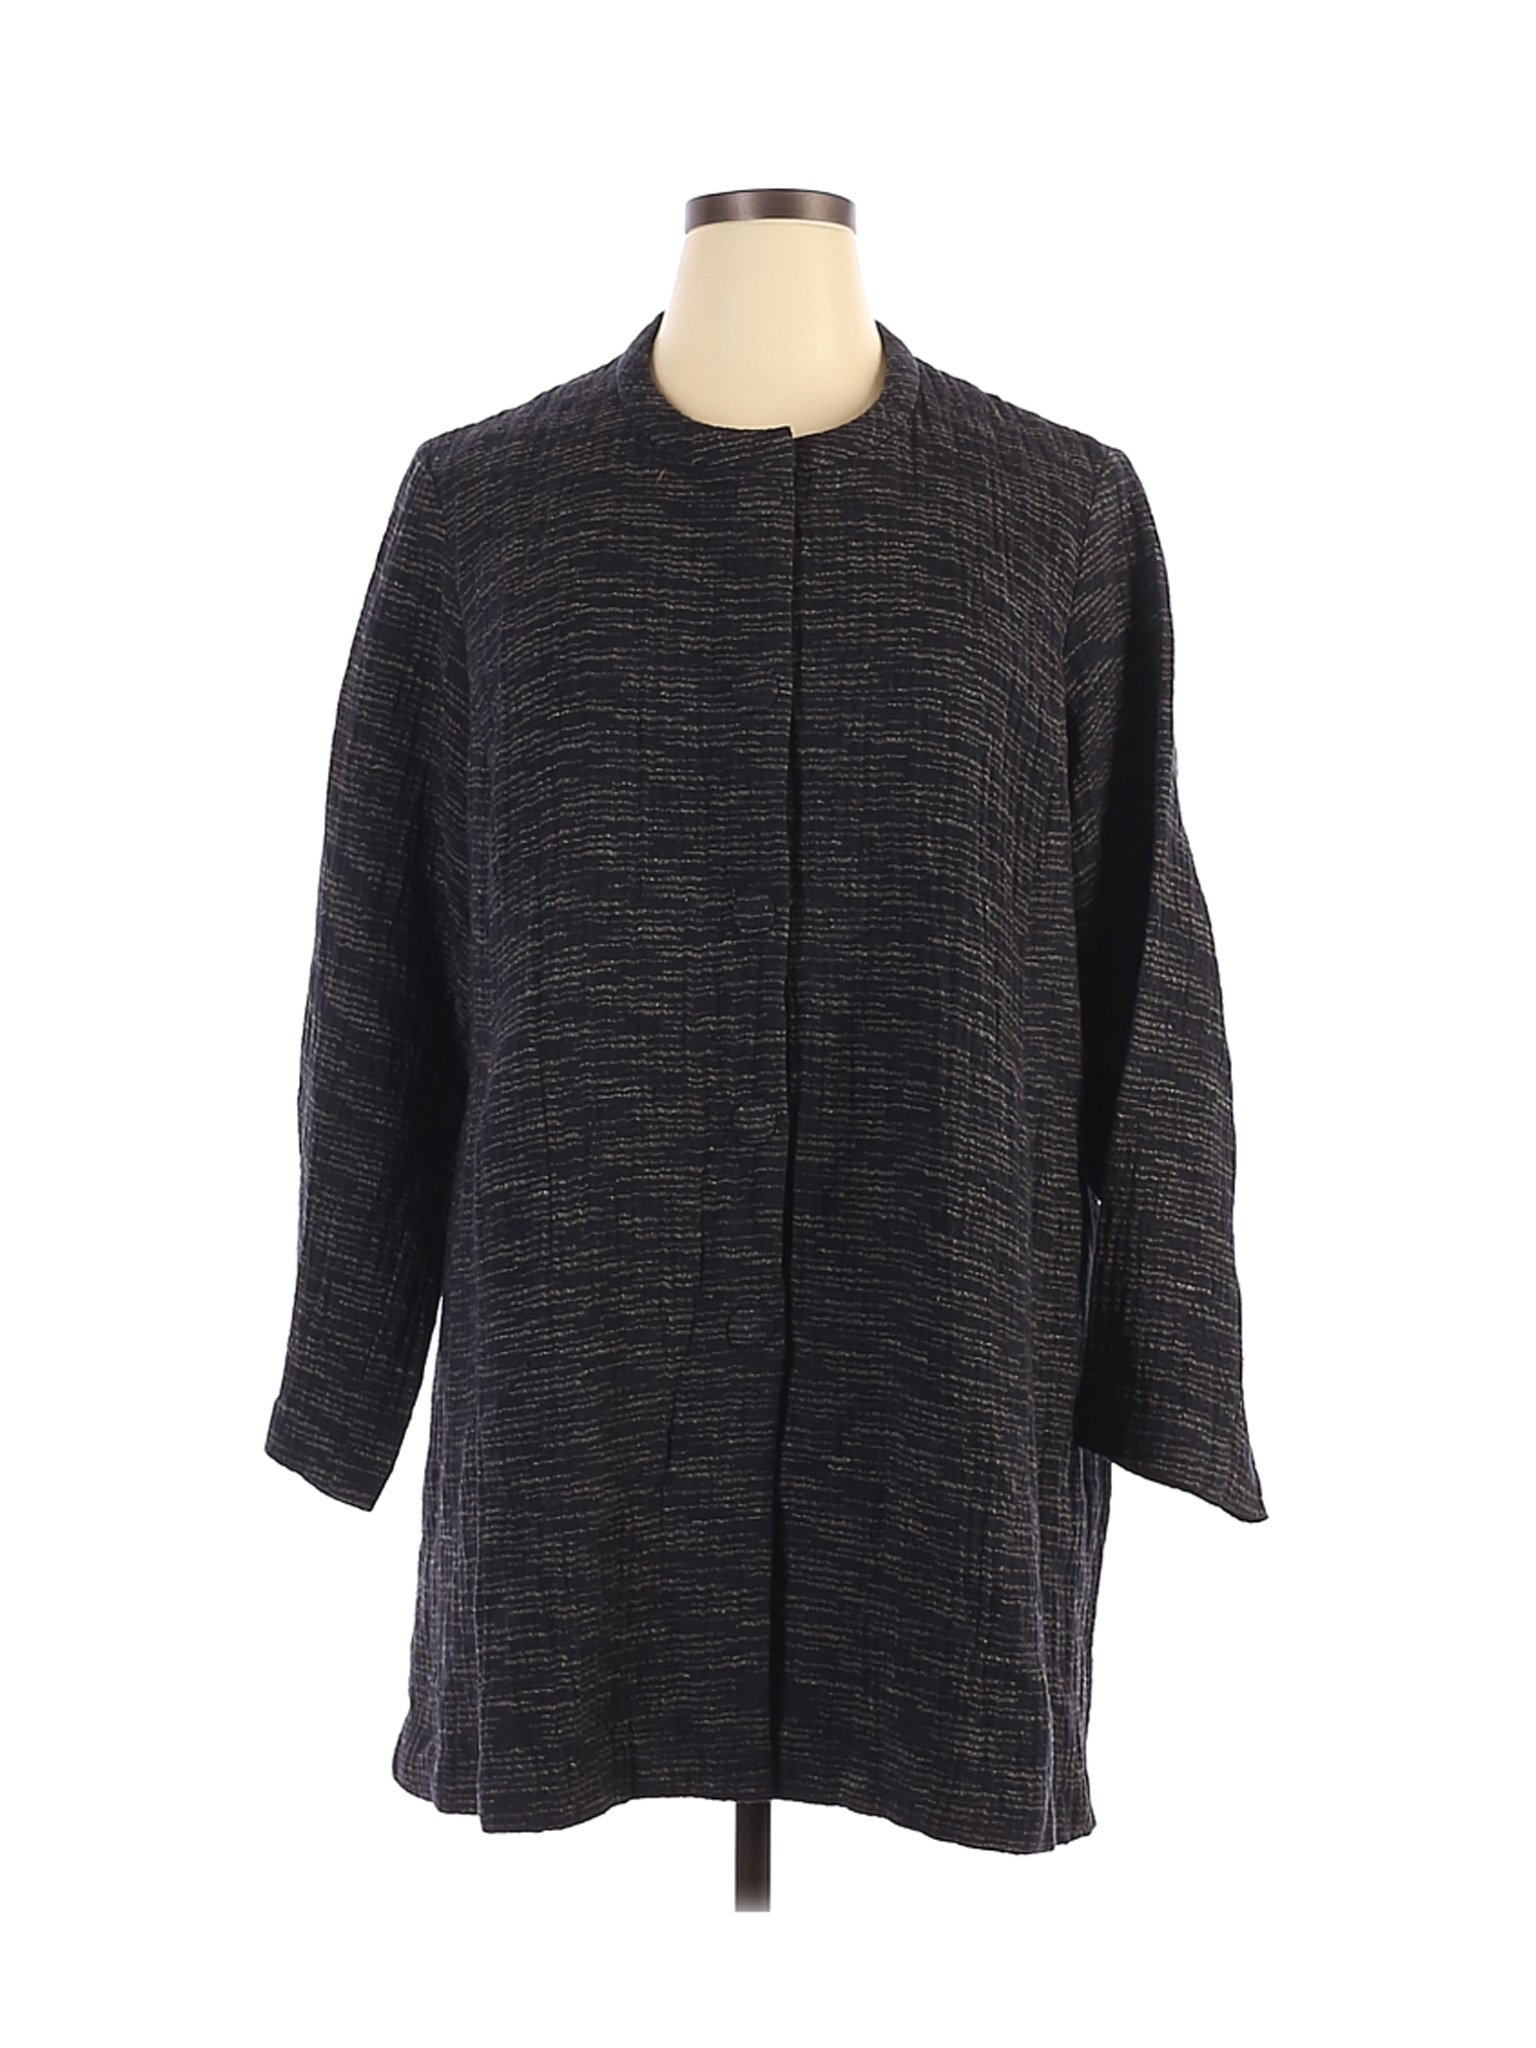 Eileen Fisher Women Black Coat 1X Plus | eBay